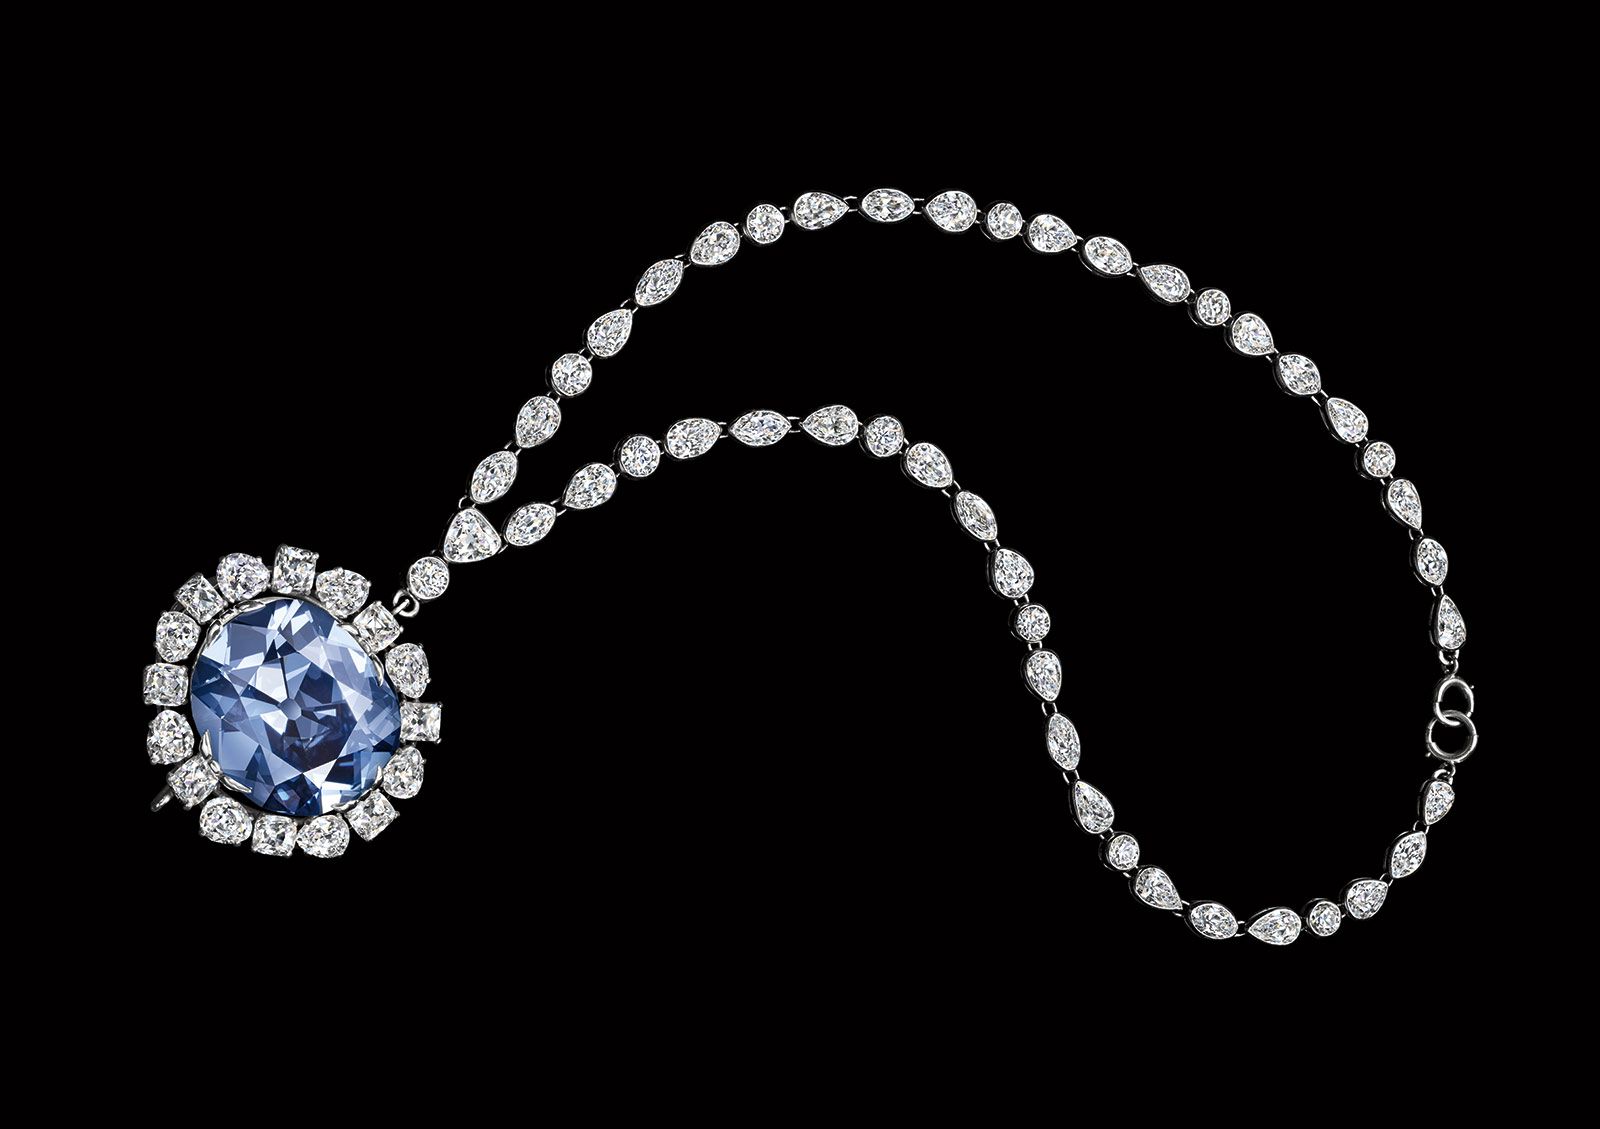 The Hope Diamond necklace with a 45.52 carat blue diamond